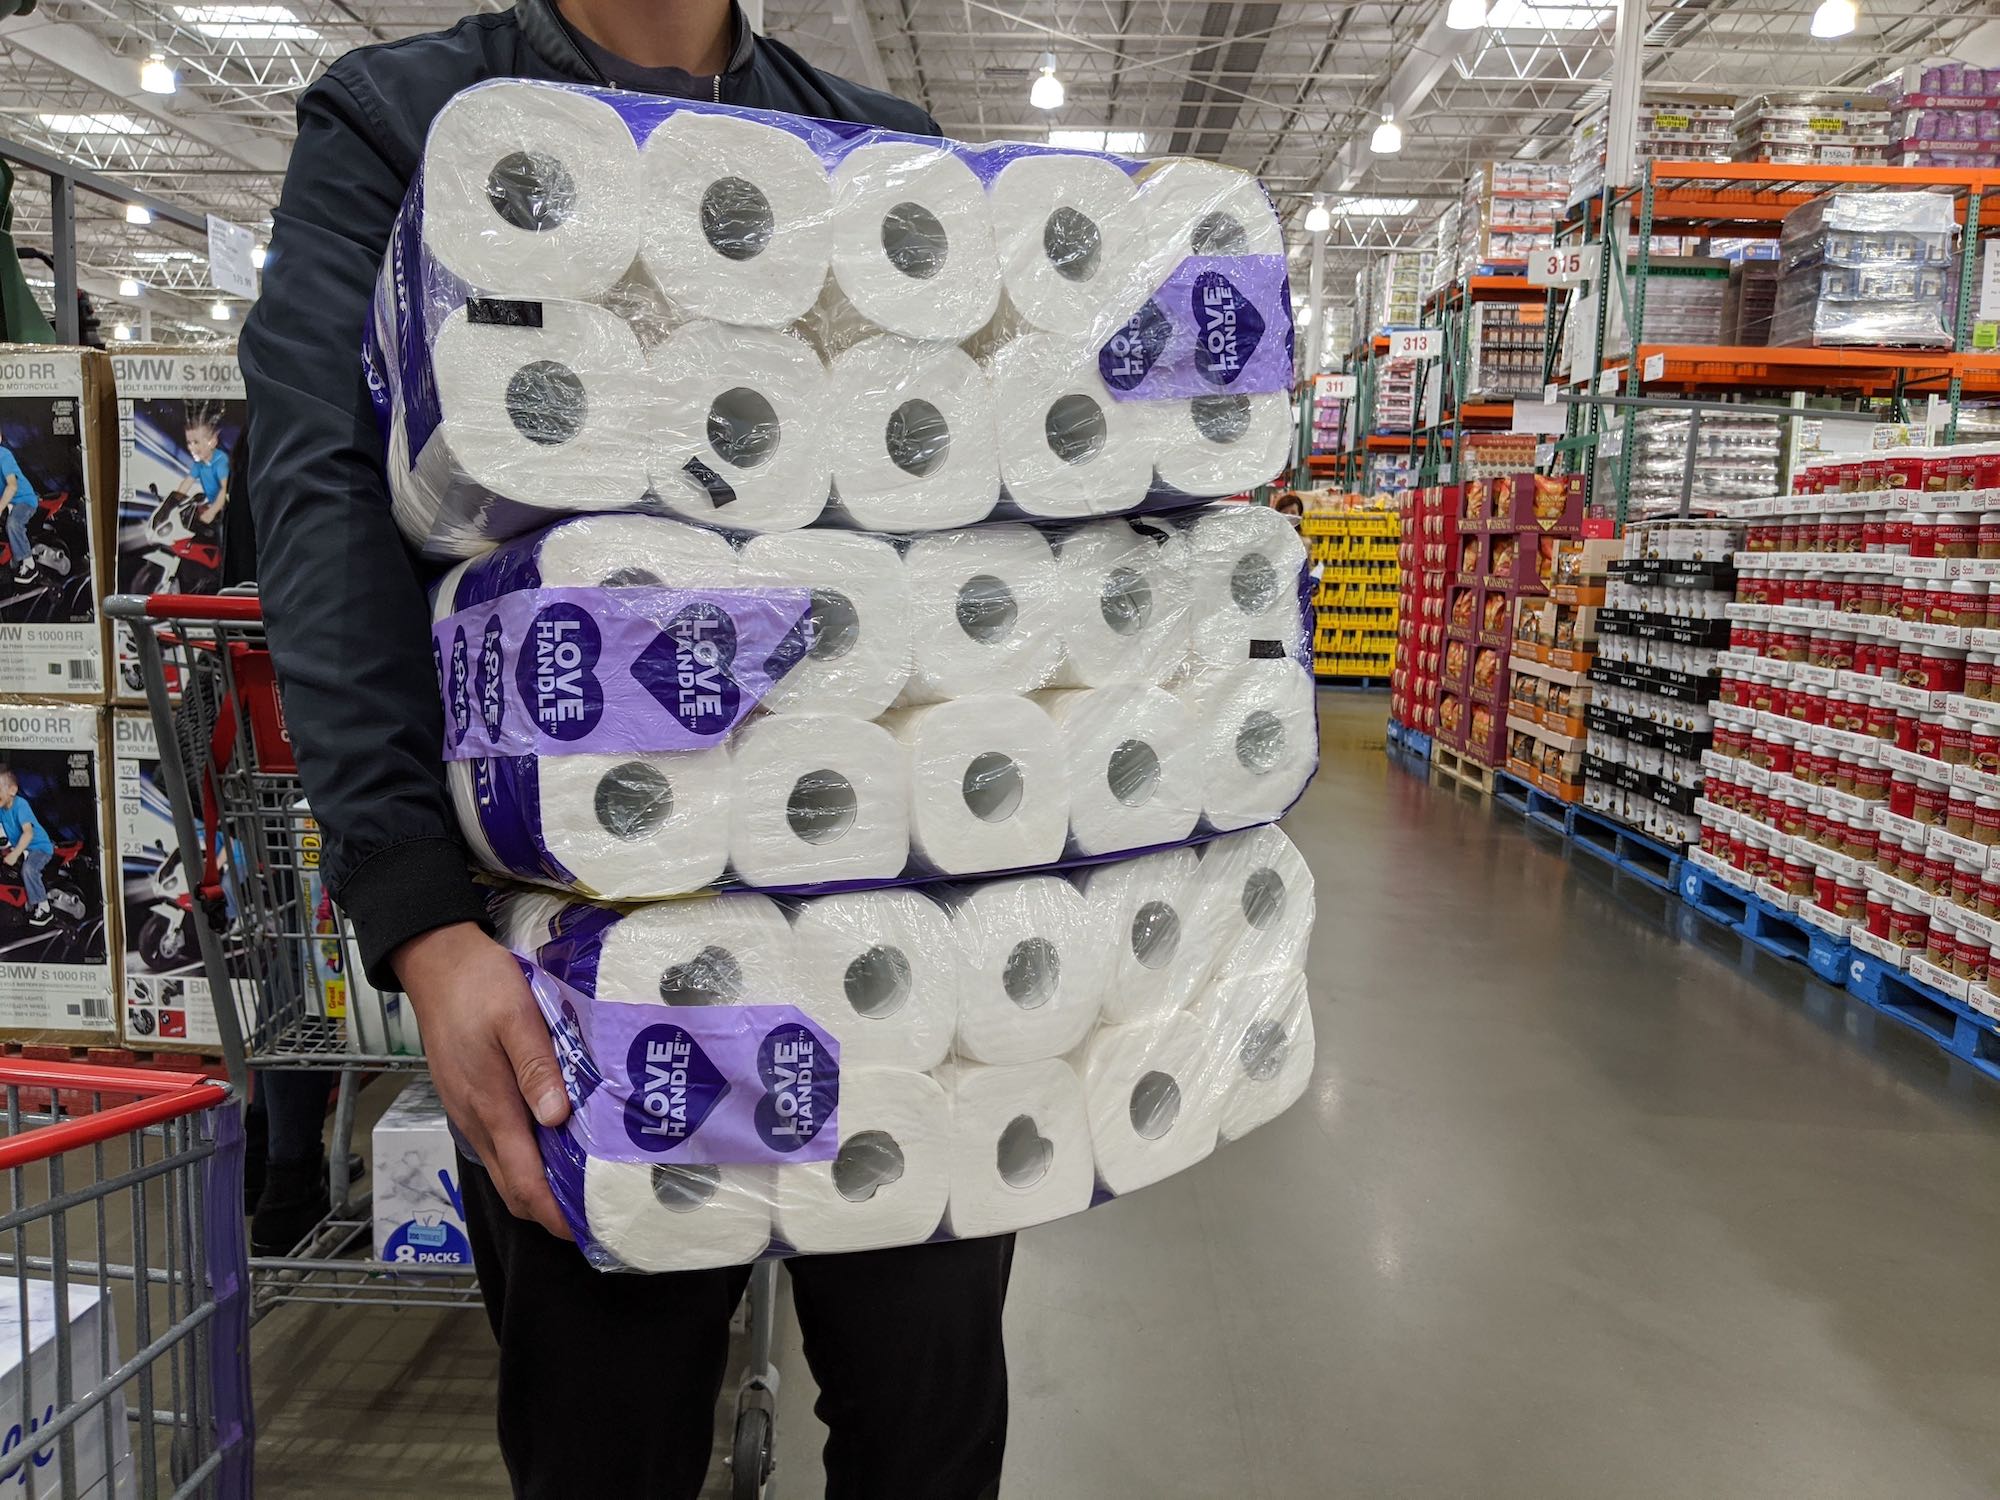 Coronavirus panic: Why are people stockpiling toilet paper?